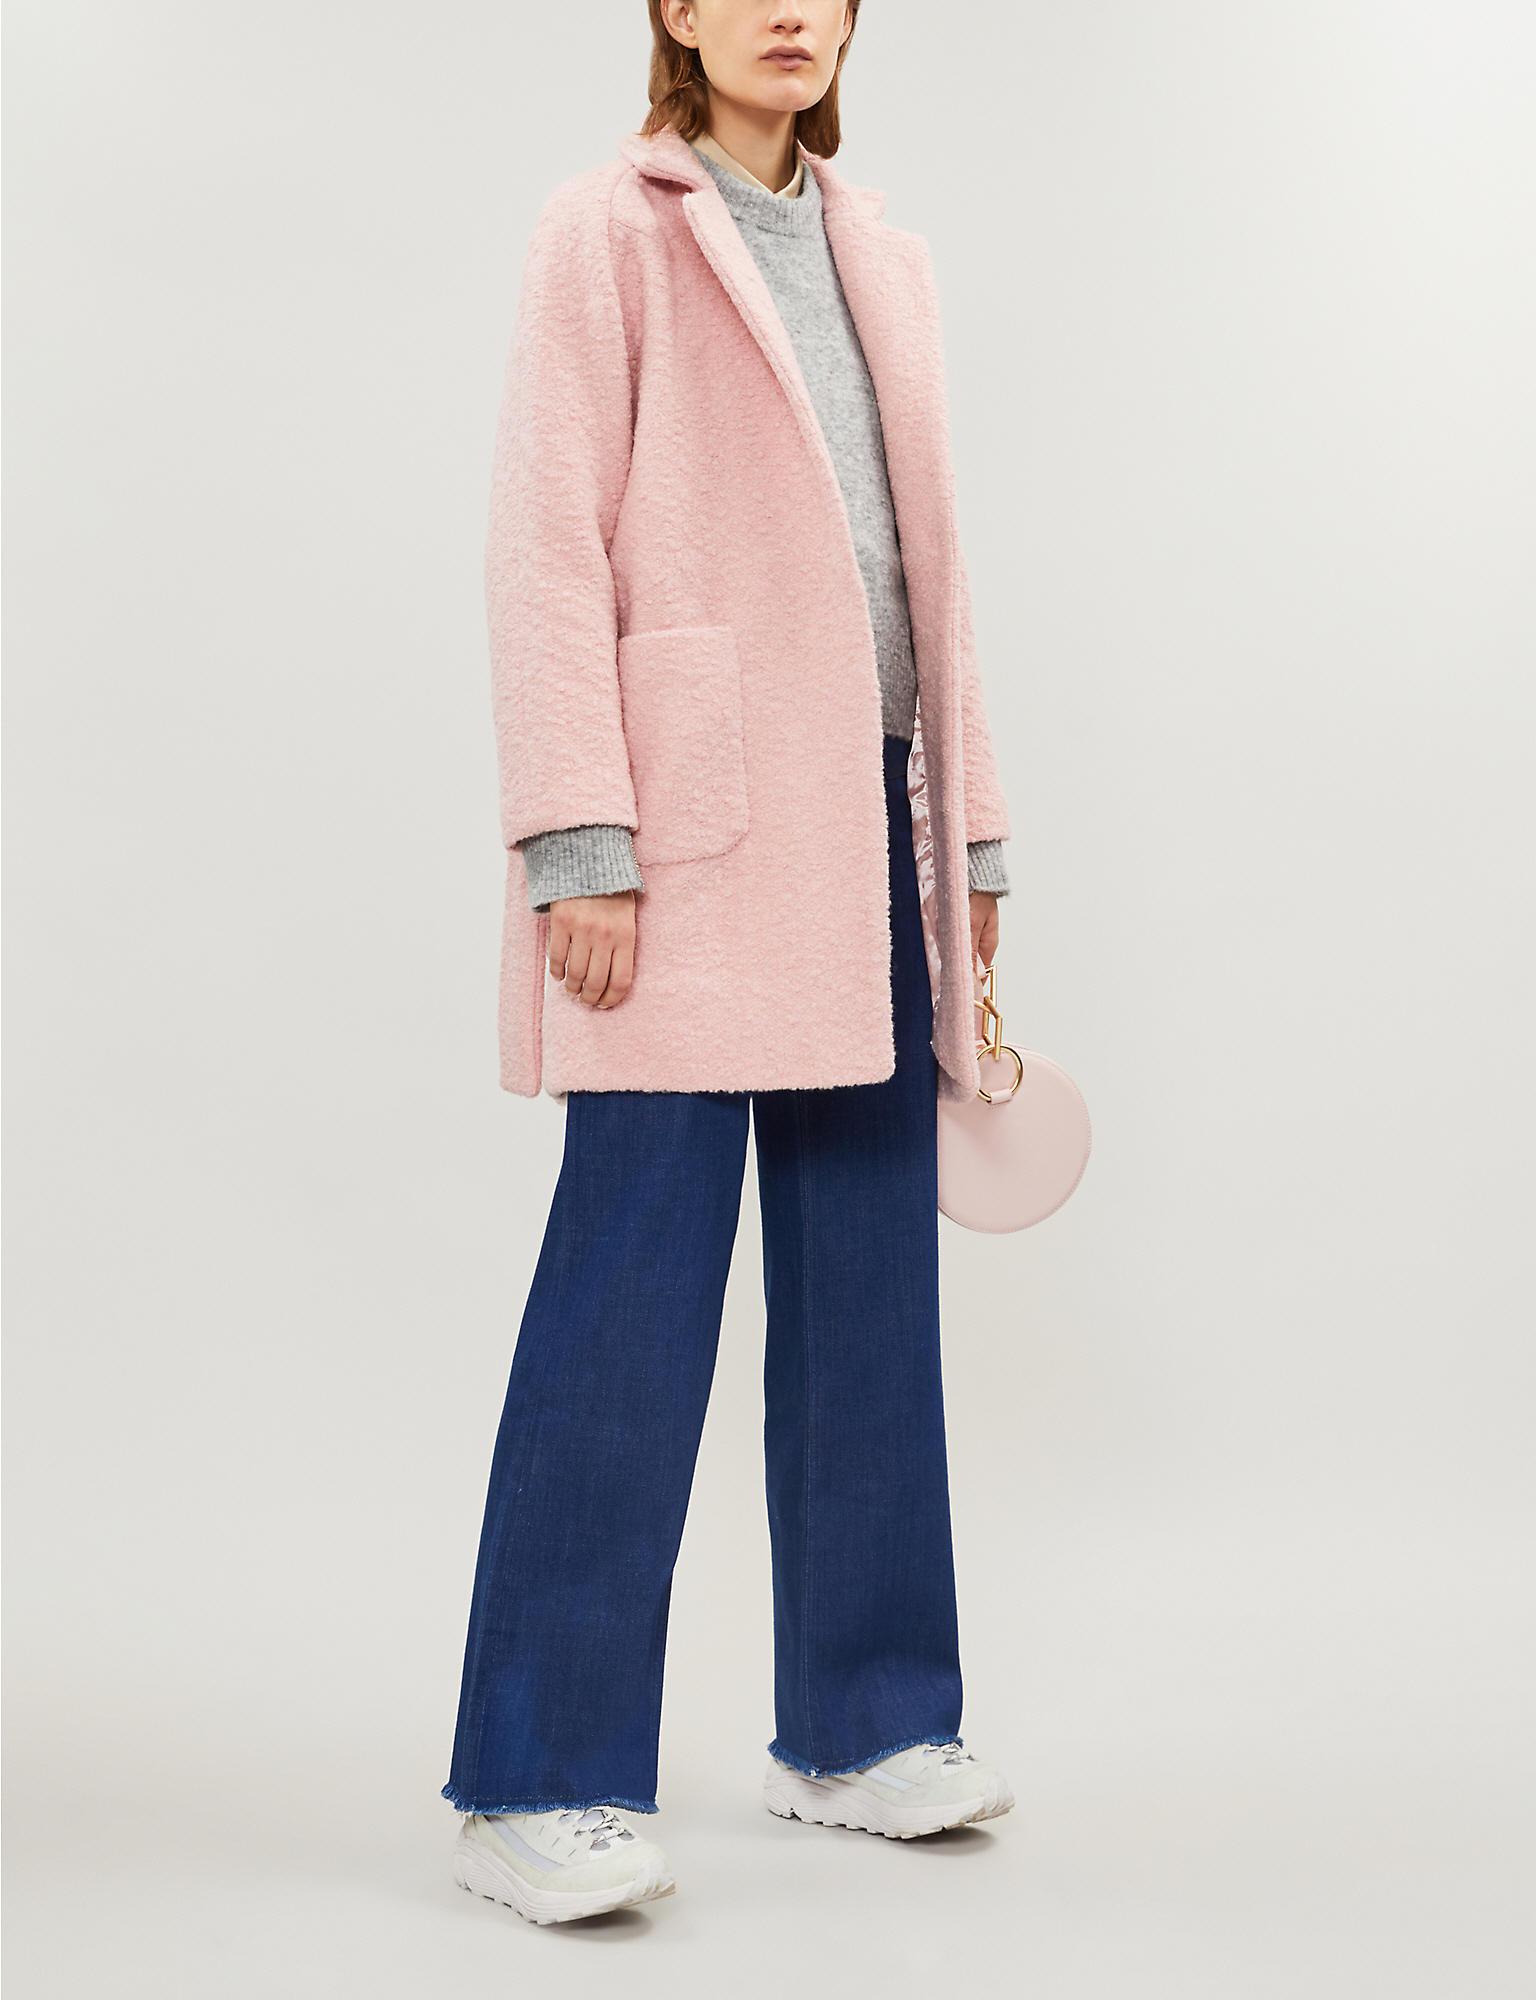 Ganni Women's Silver And Pink Fenn Wool Blend Coat - Lyst